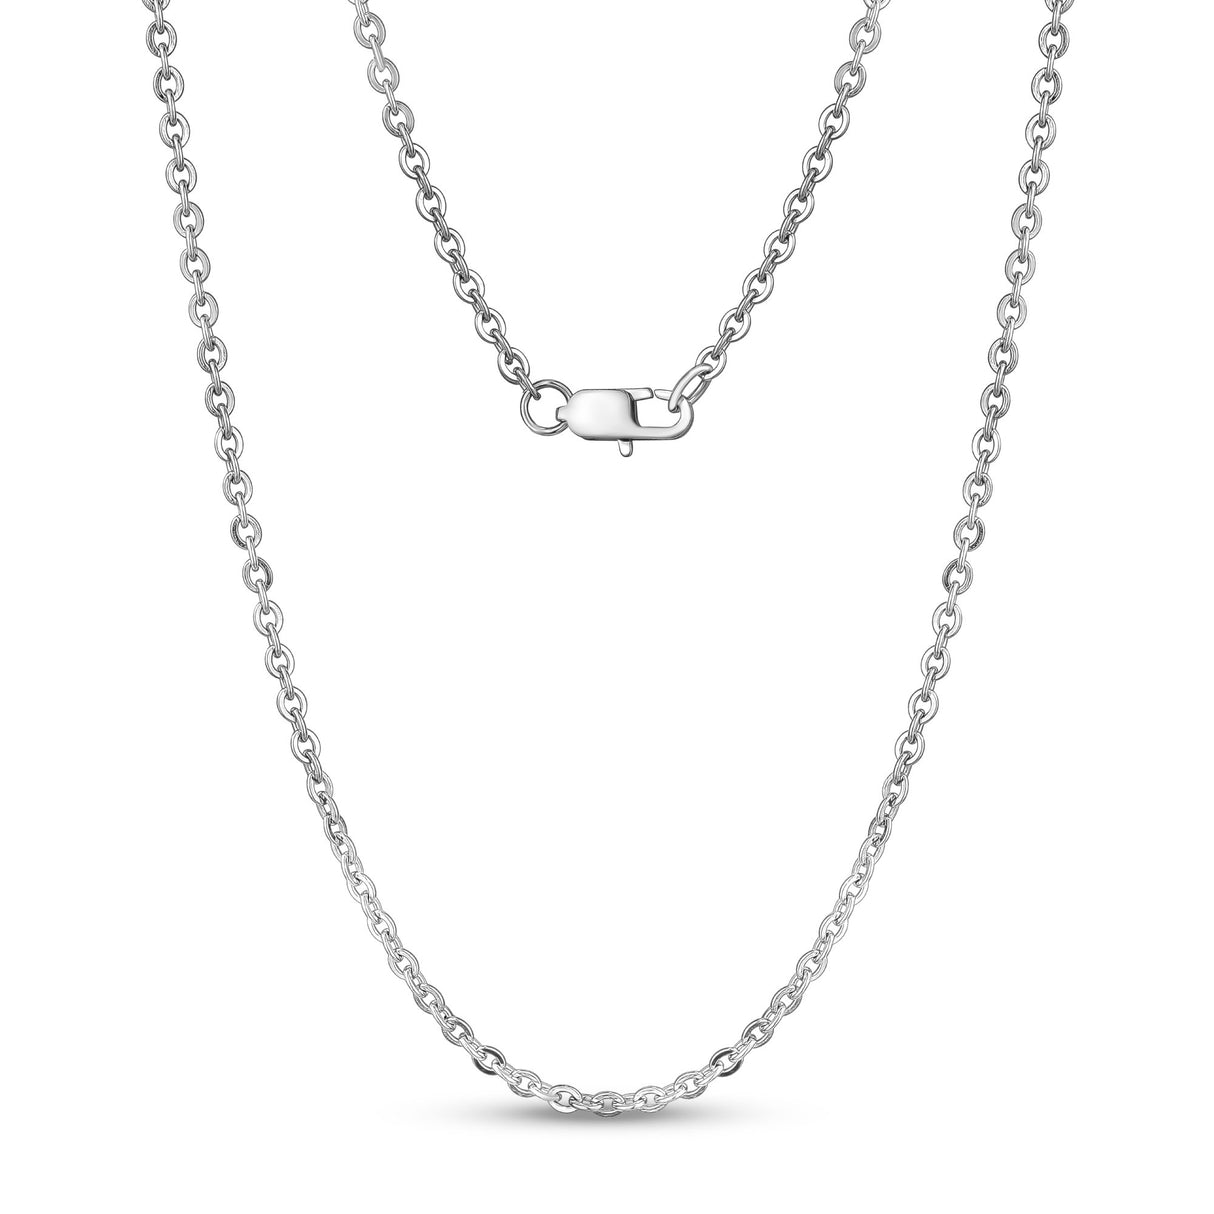 Unisex Halsketten - 3mm flache Anker Oval Link Stahlkette Halskette